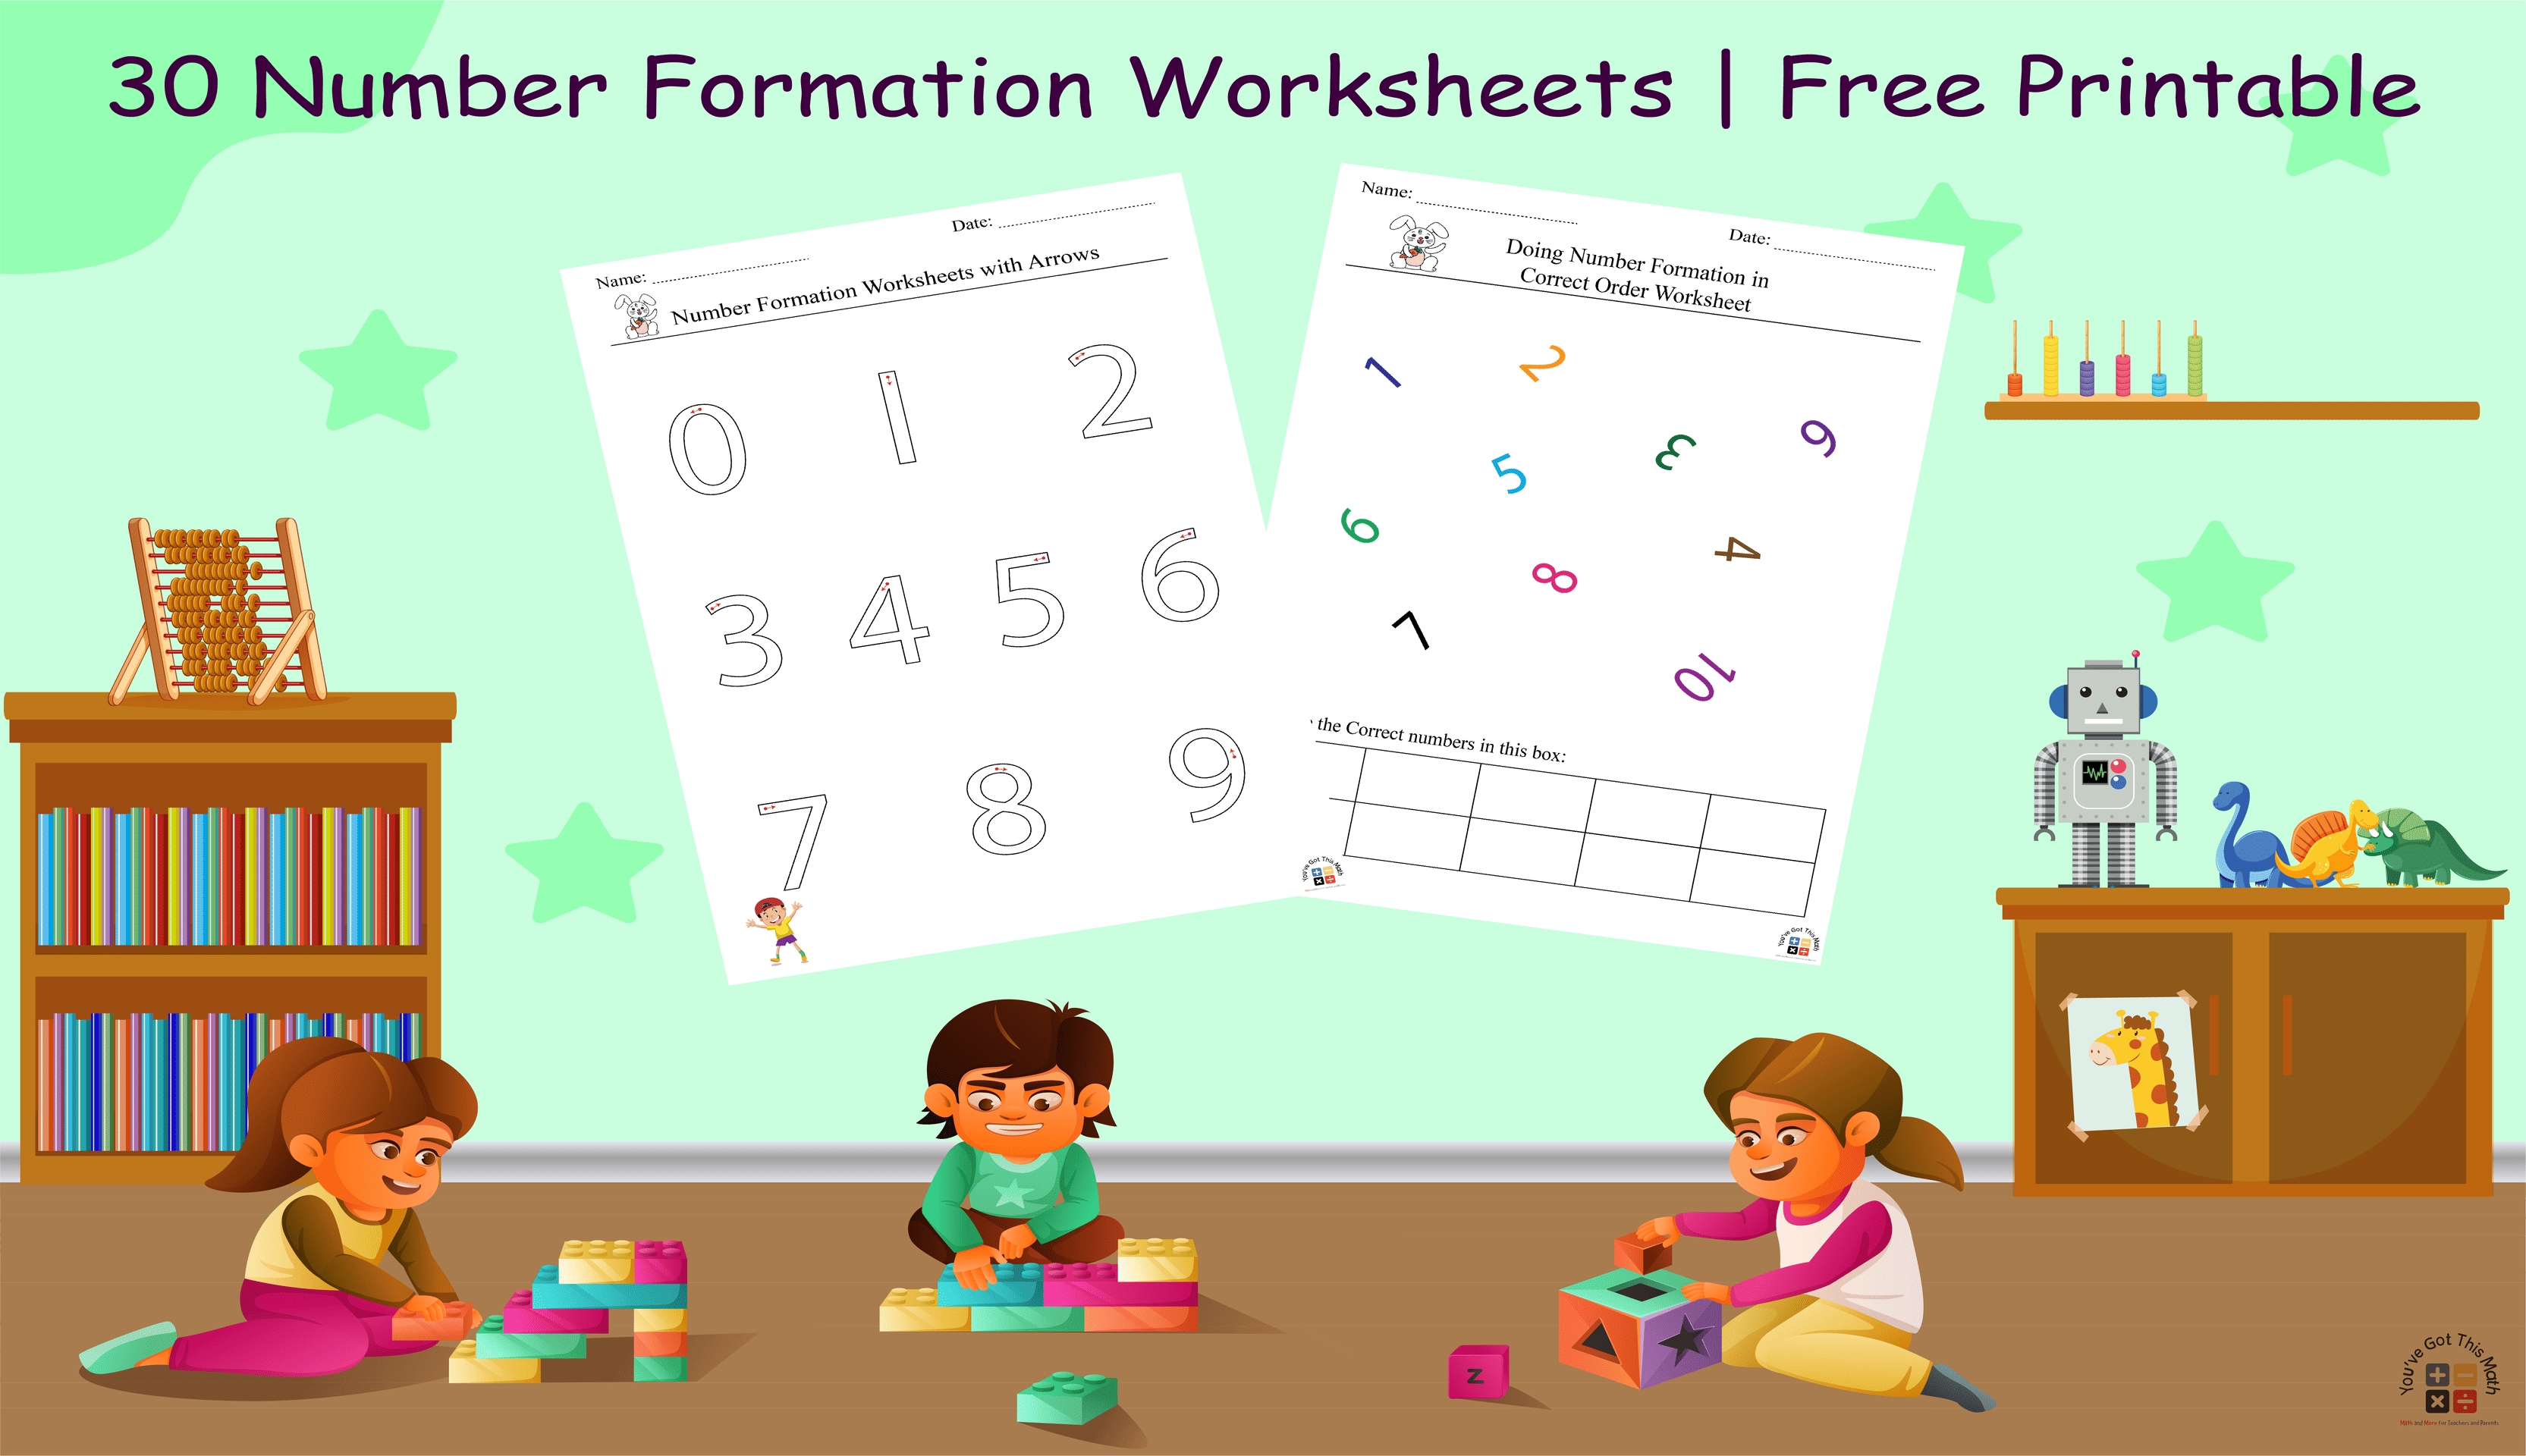 30 Number Formation Worksheets | Free Printable